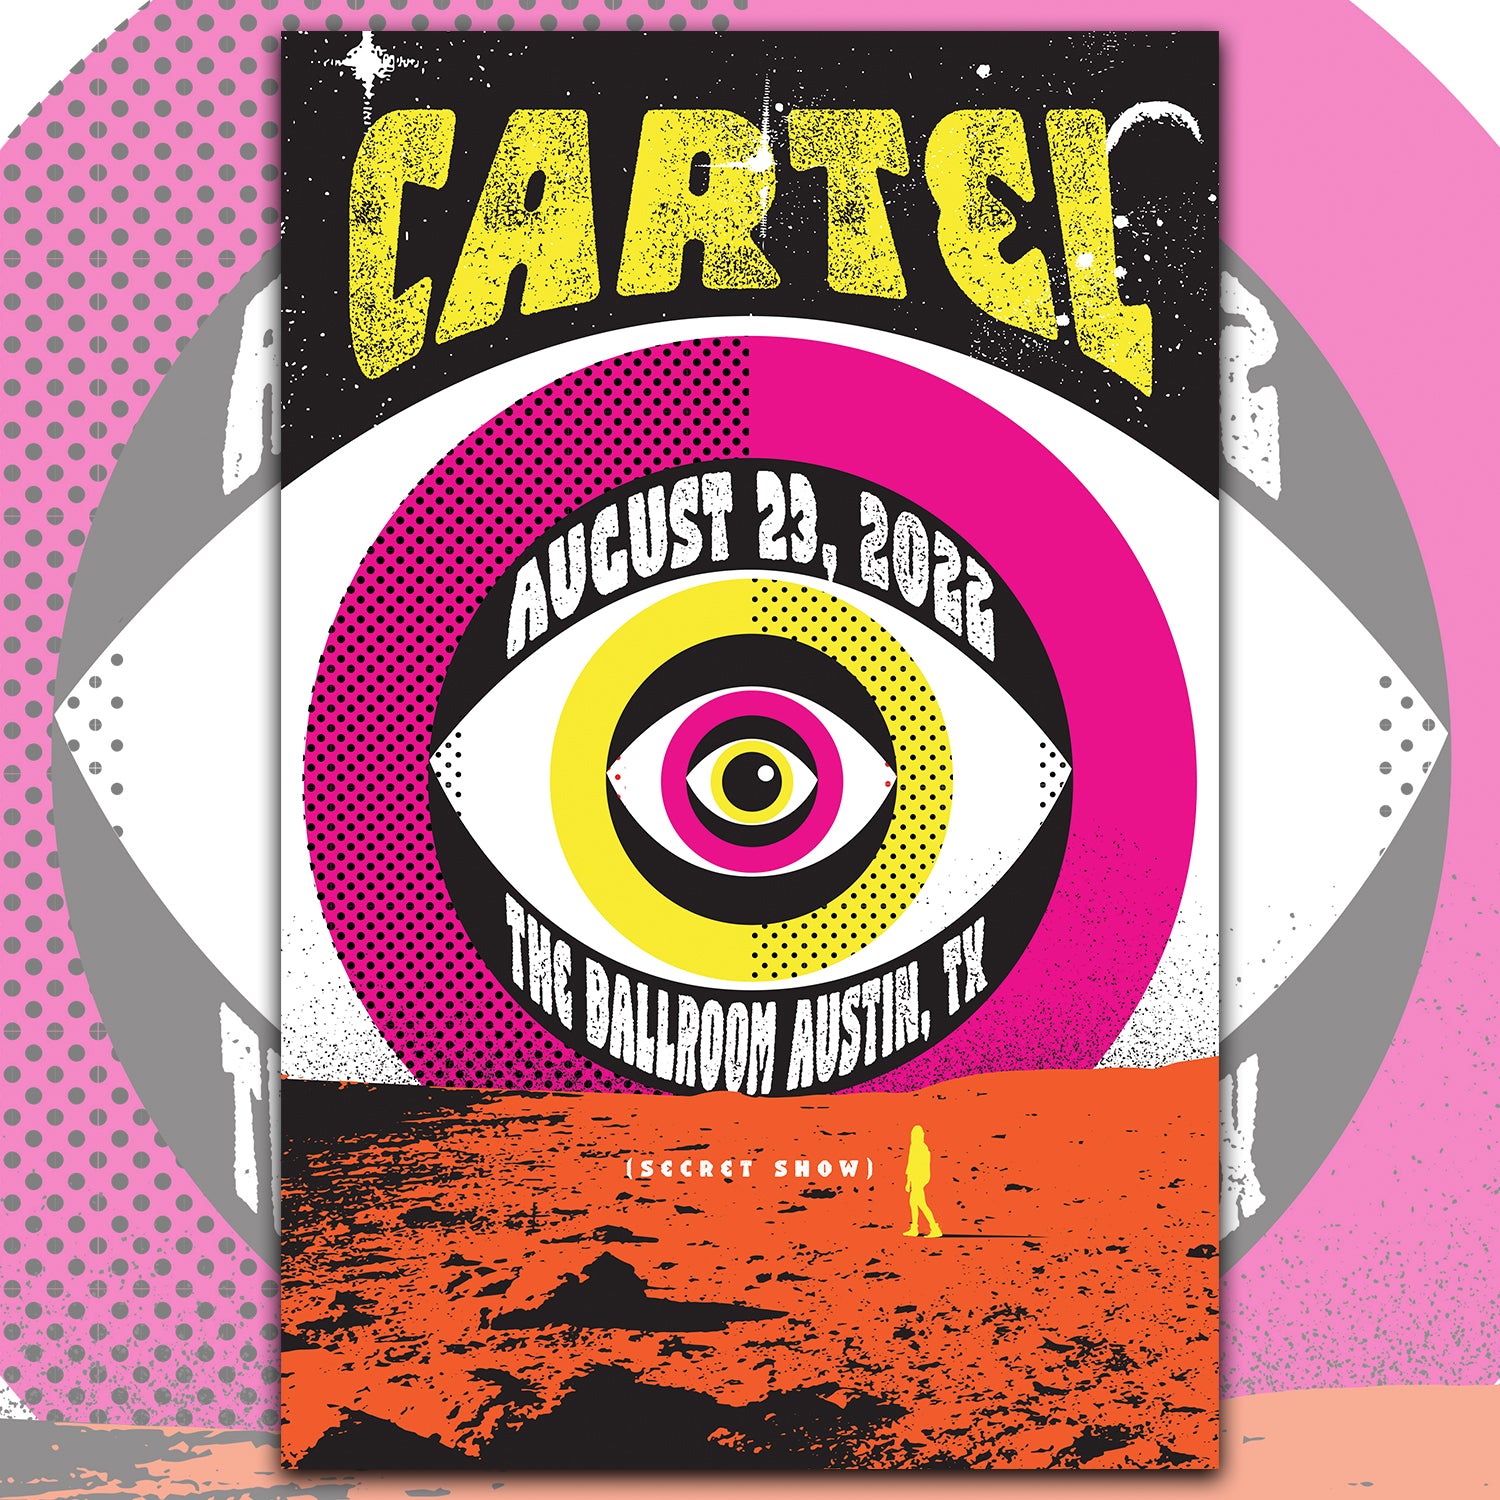 Cartel - Austin, TX, The Ballroom - "Secret Show" - Show Poster 8/23